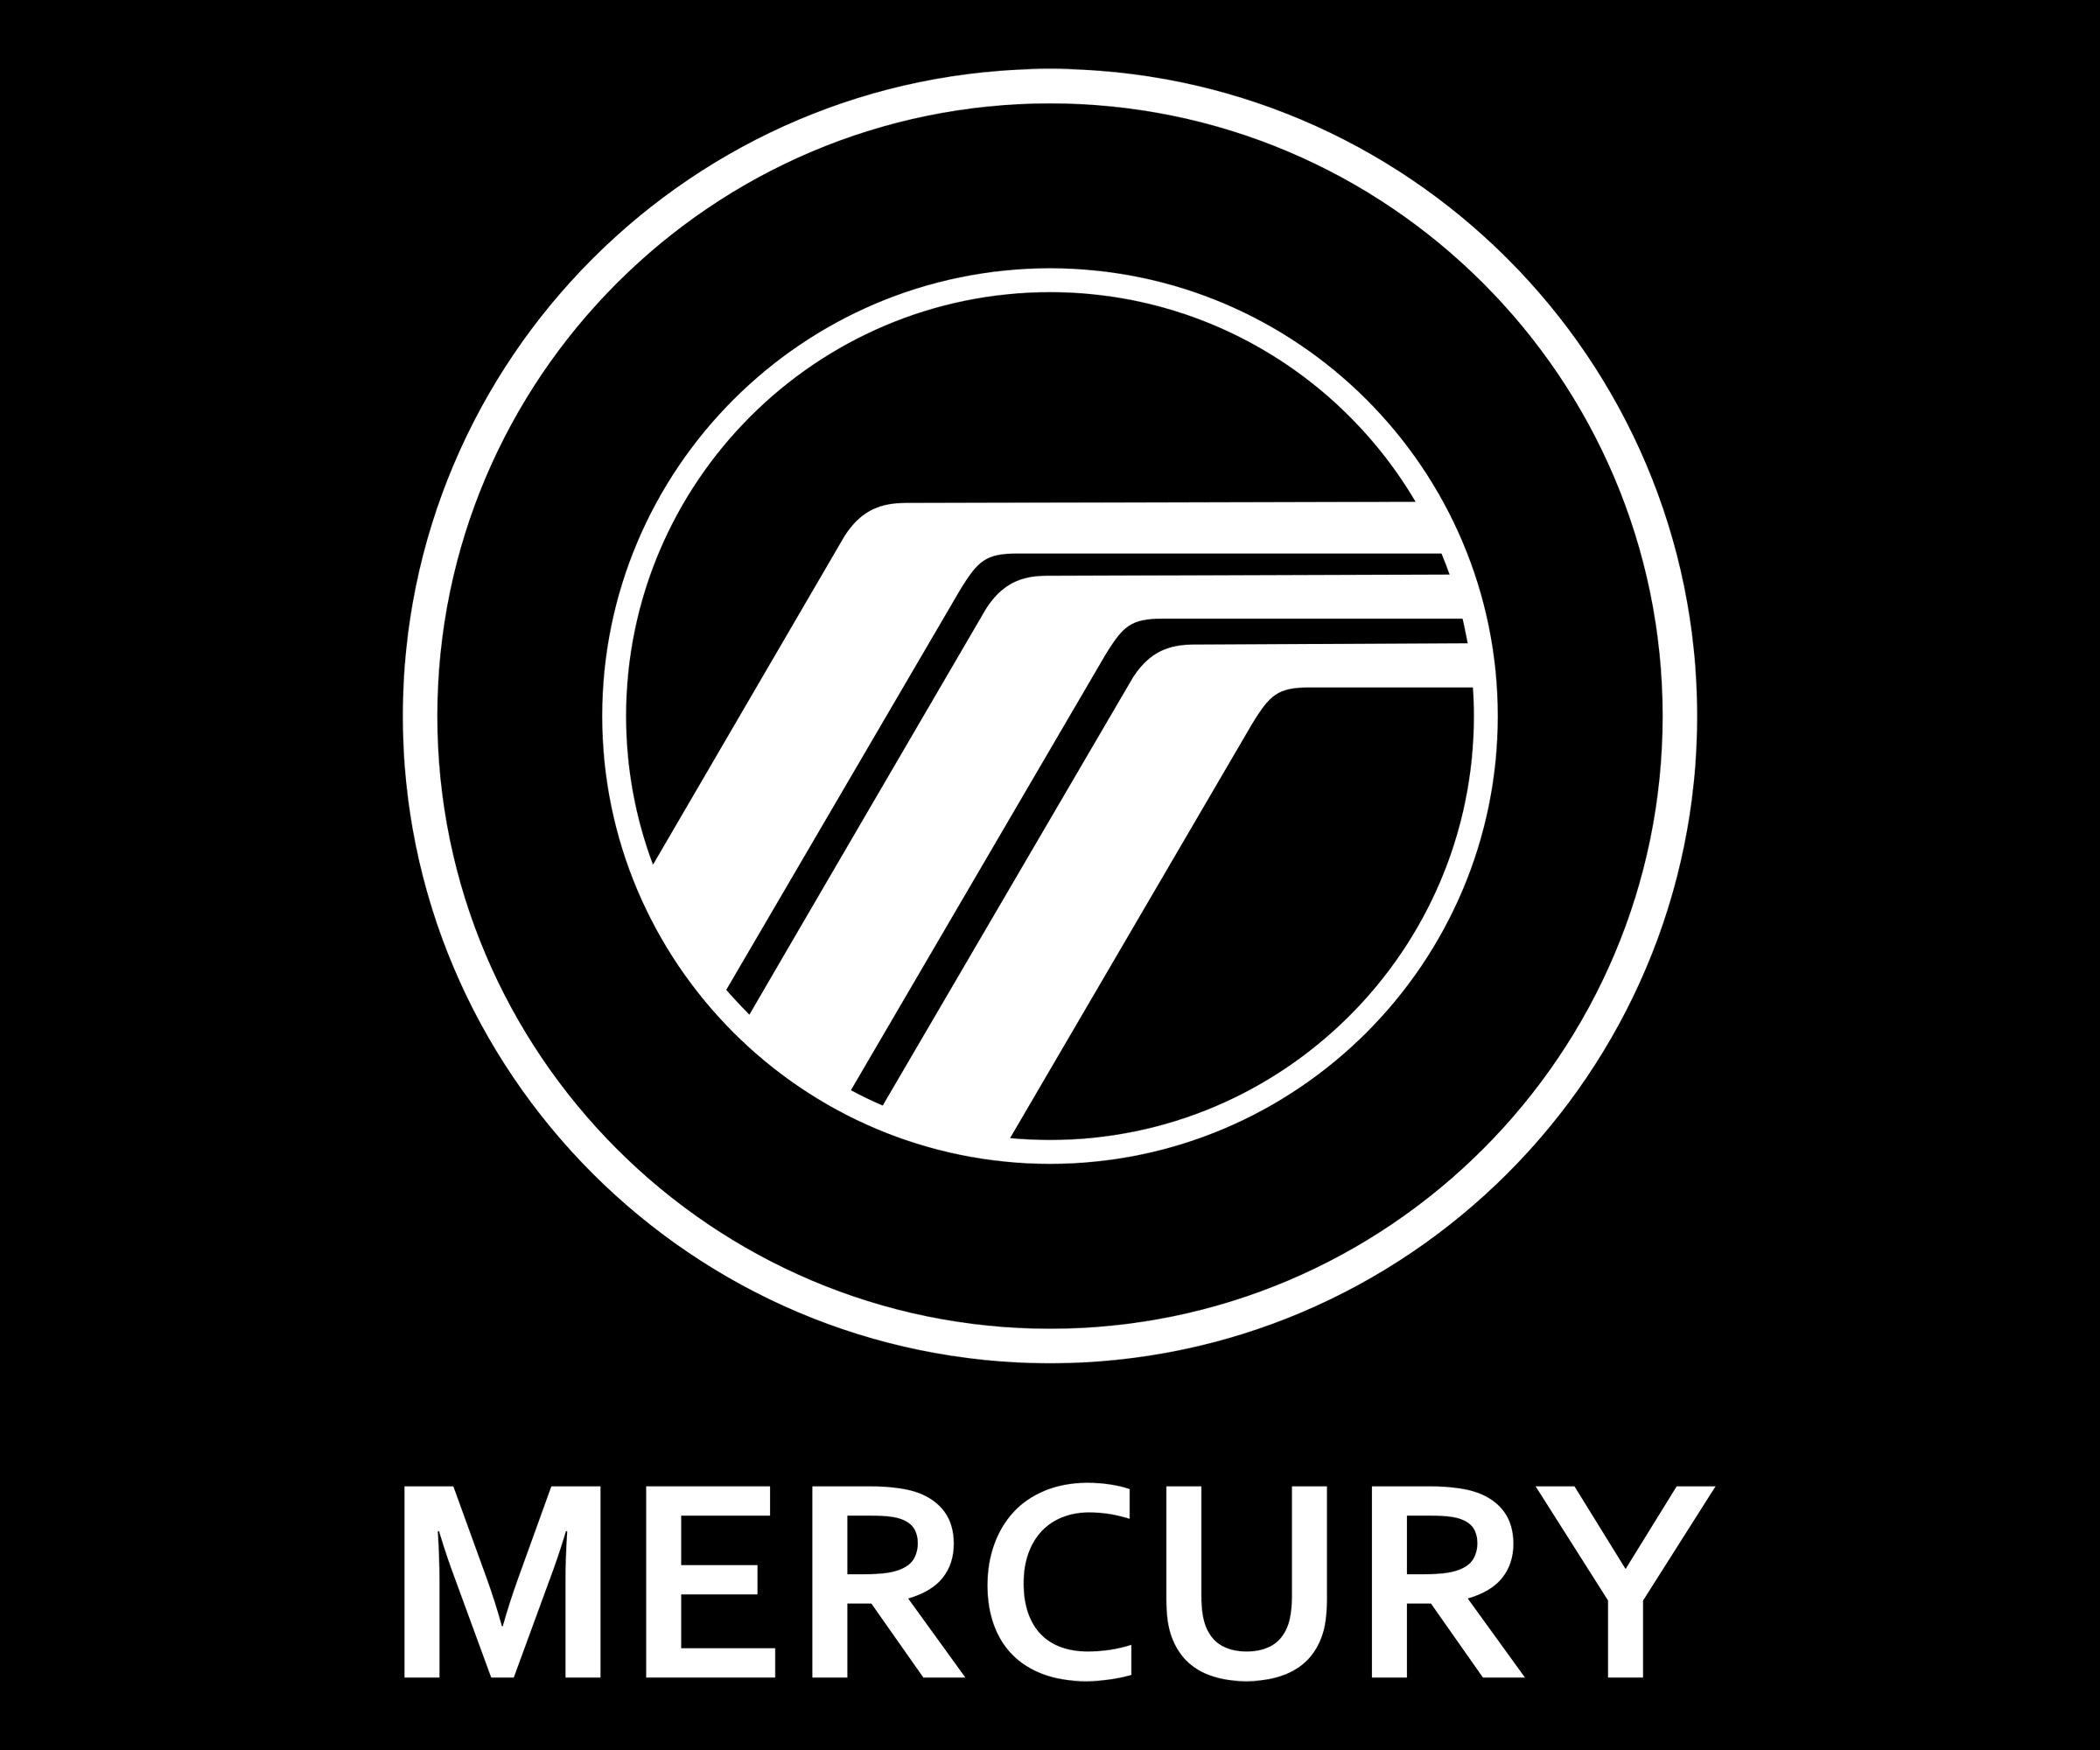 Mercury Logo - Mercury Logo Meaning and History, latest models | World Cars Brands